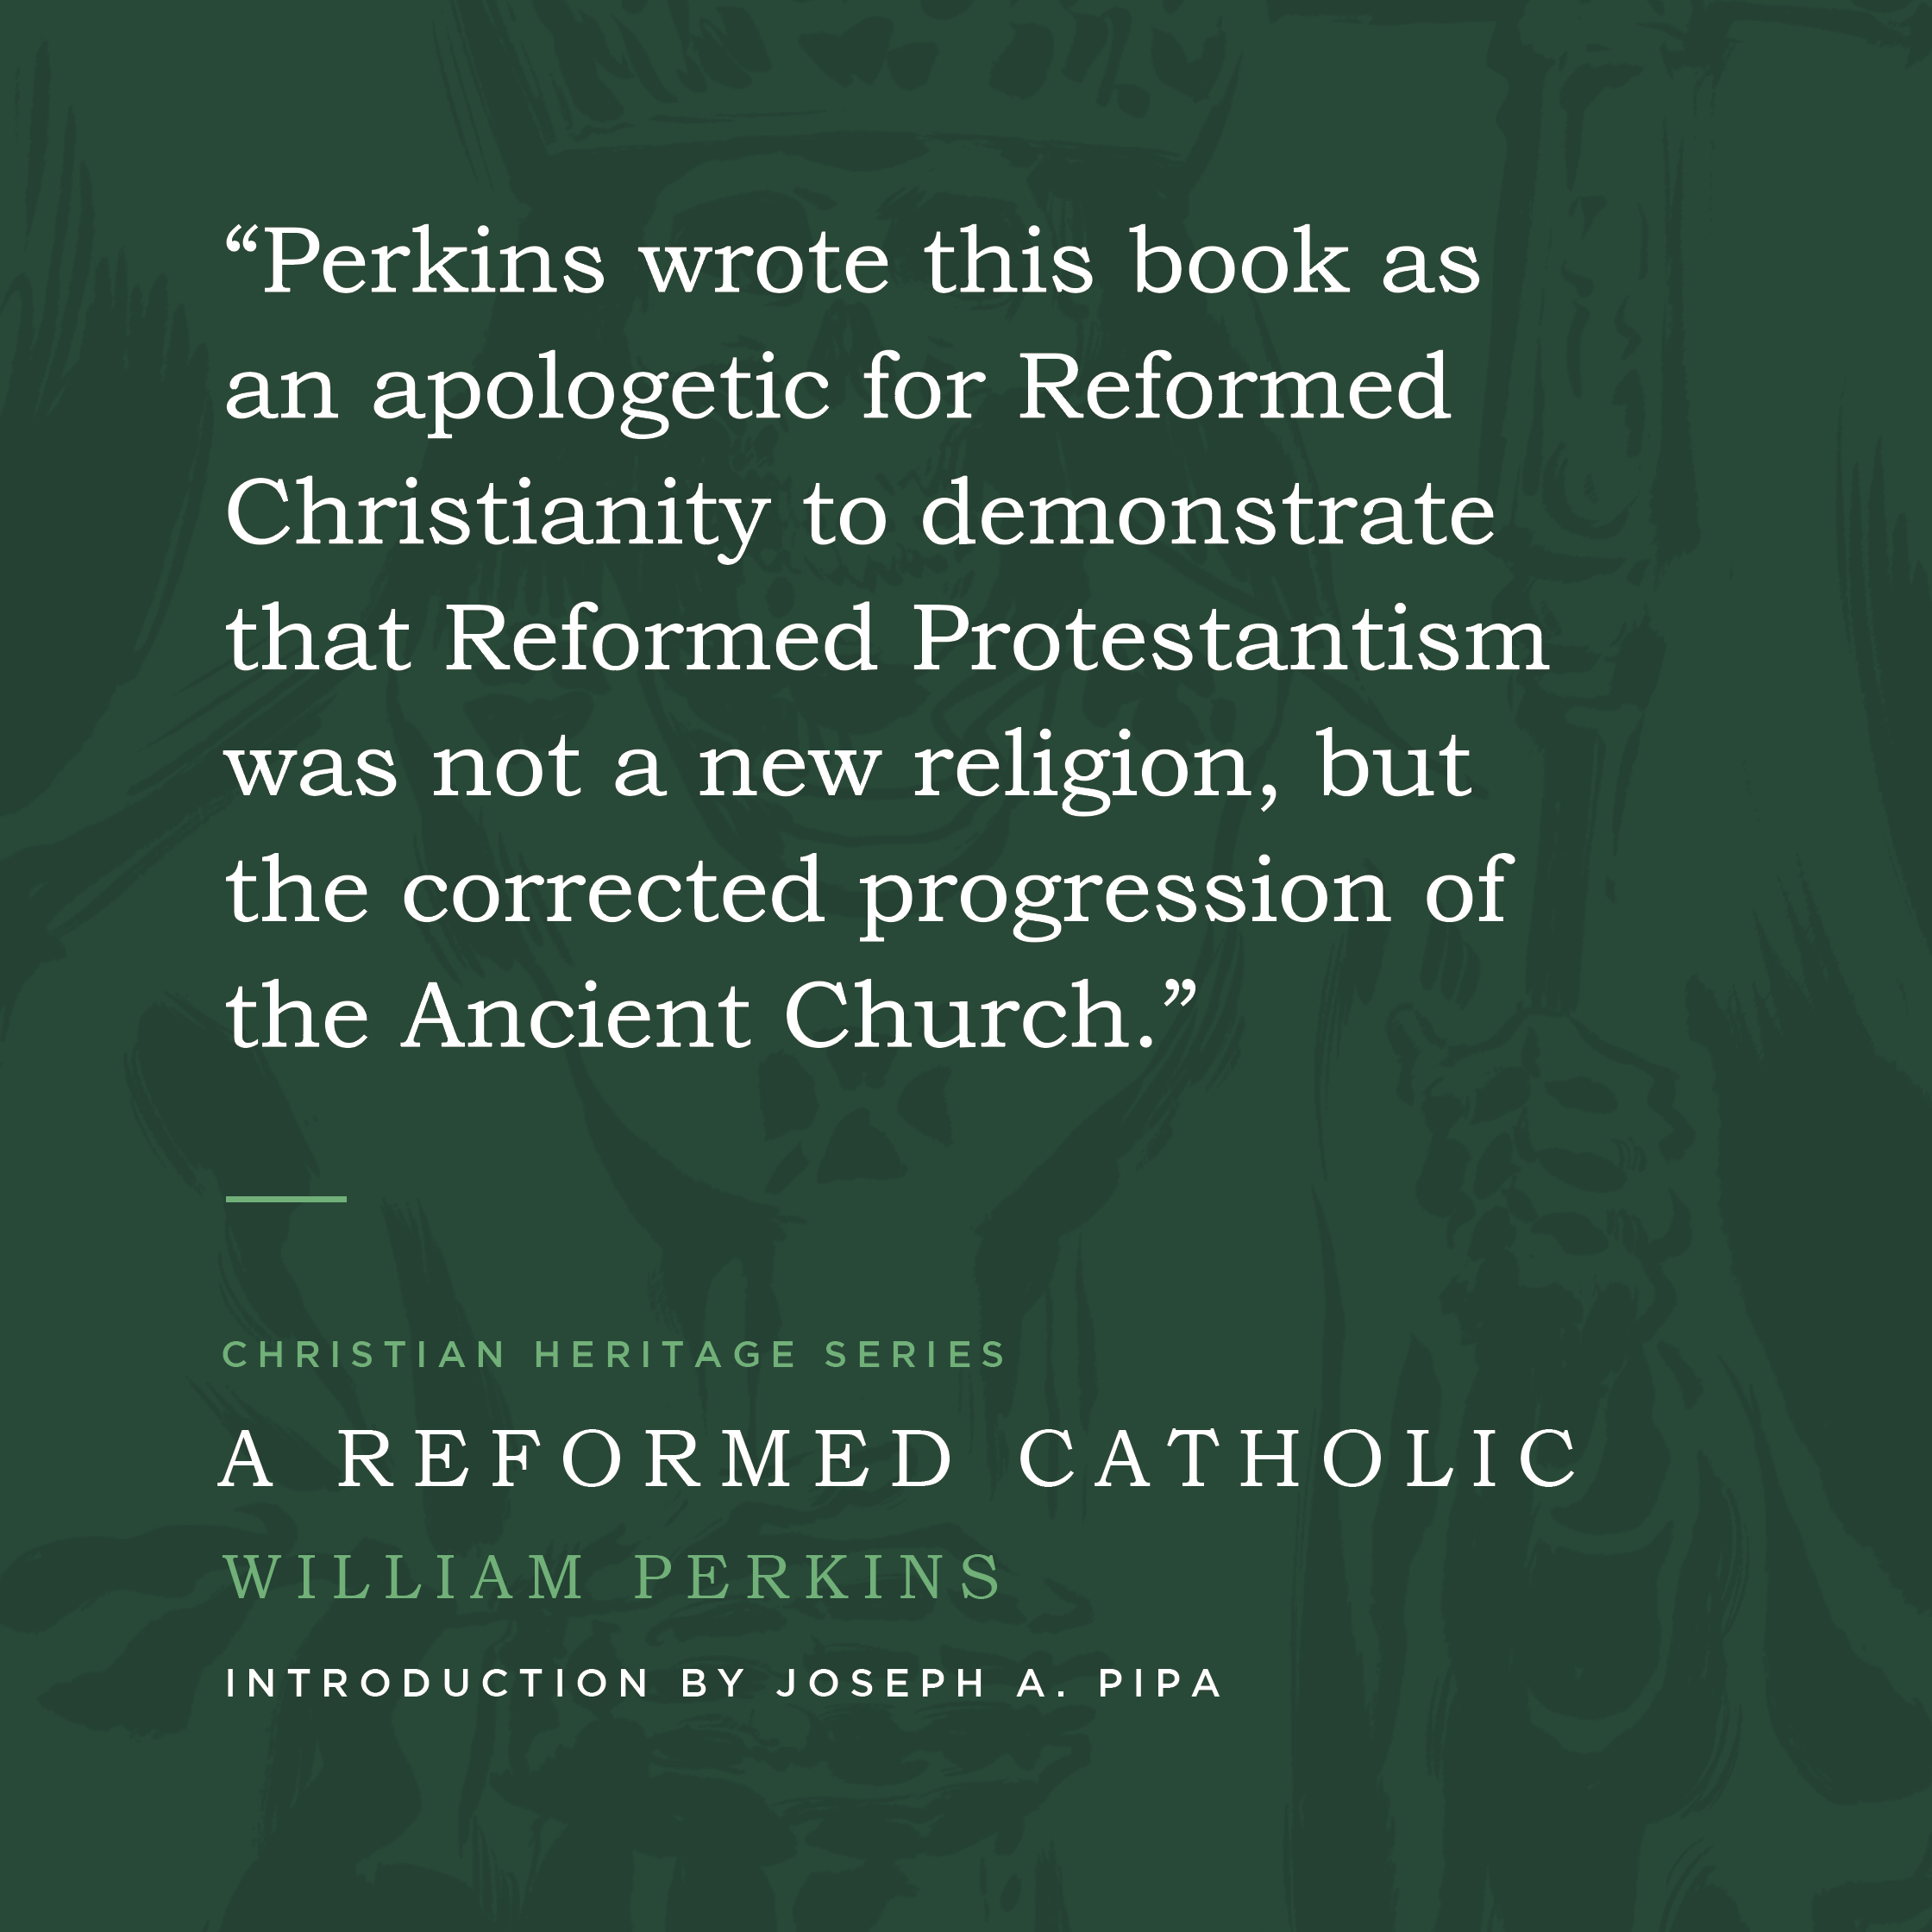 A Reformed Catholic